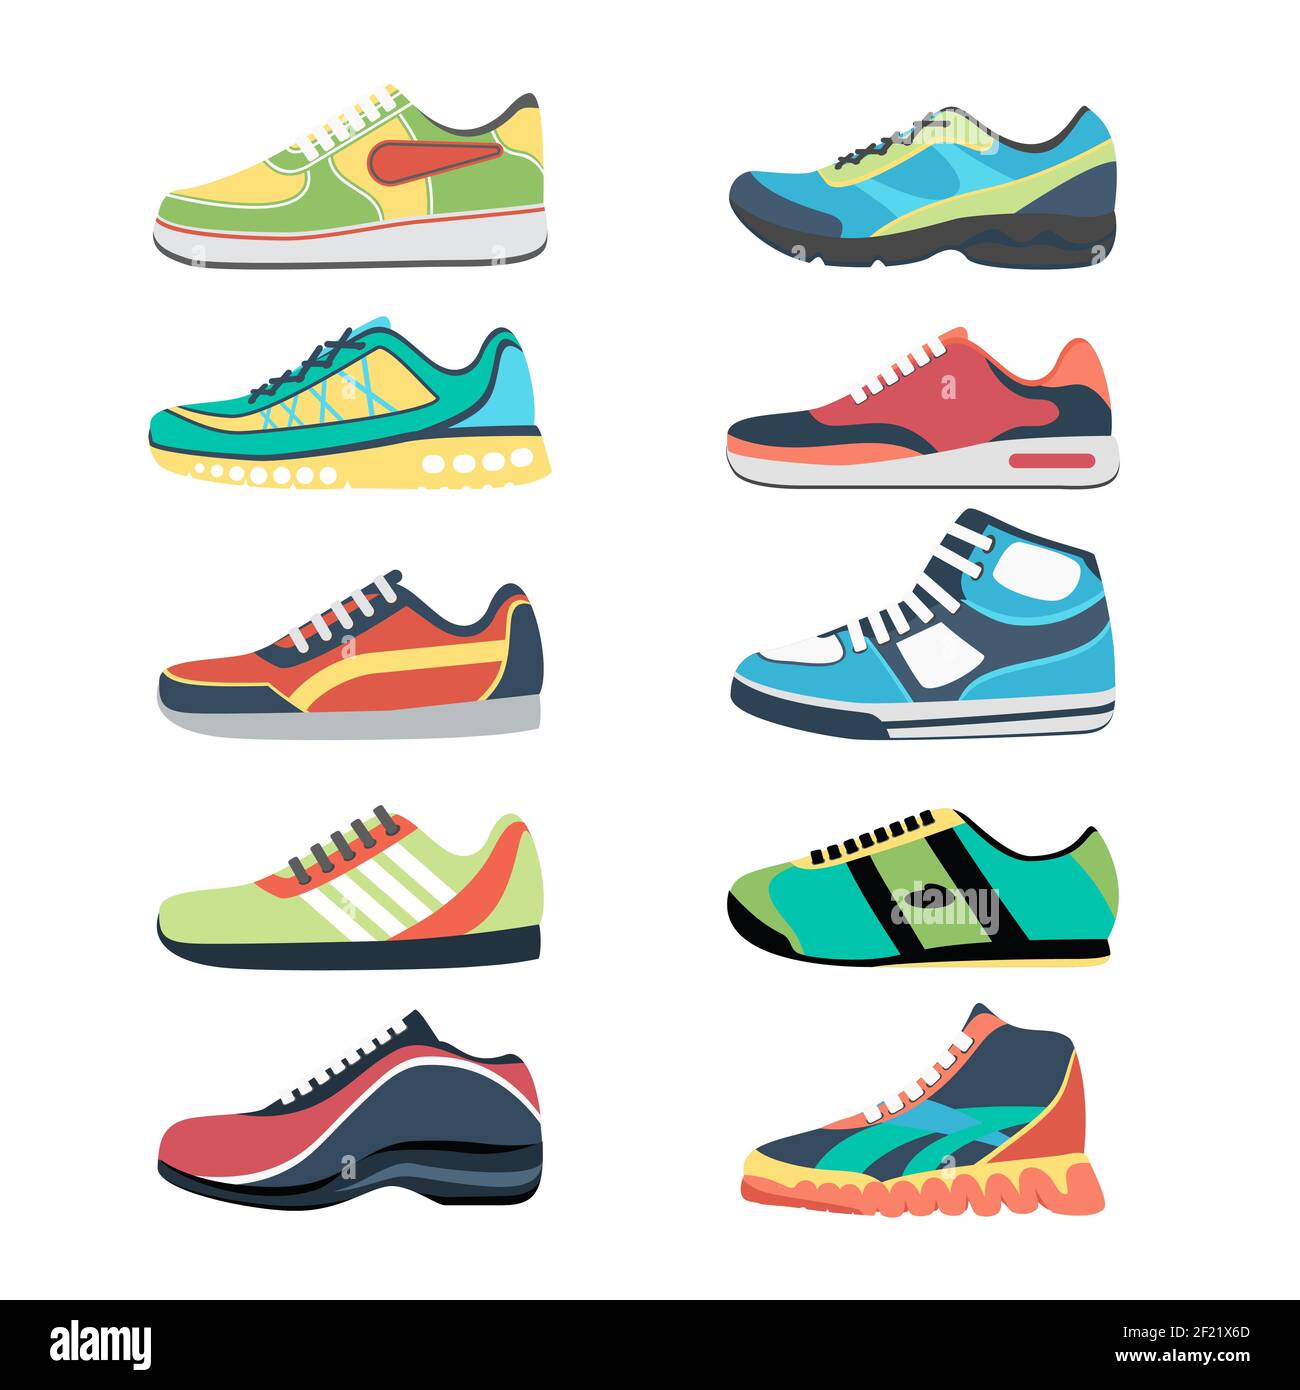 Sportschuhe Vektor-Set. Mode Sportbekleidung, Sneaker für den Alltag,  Schuhbekleidung Illustration Stock-Vektorgrafik - Alamy